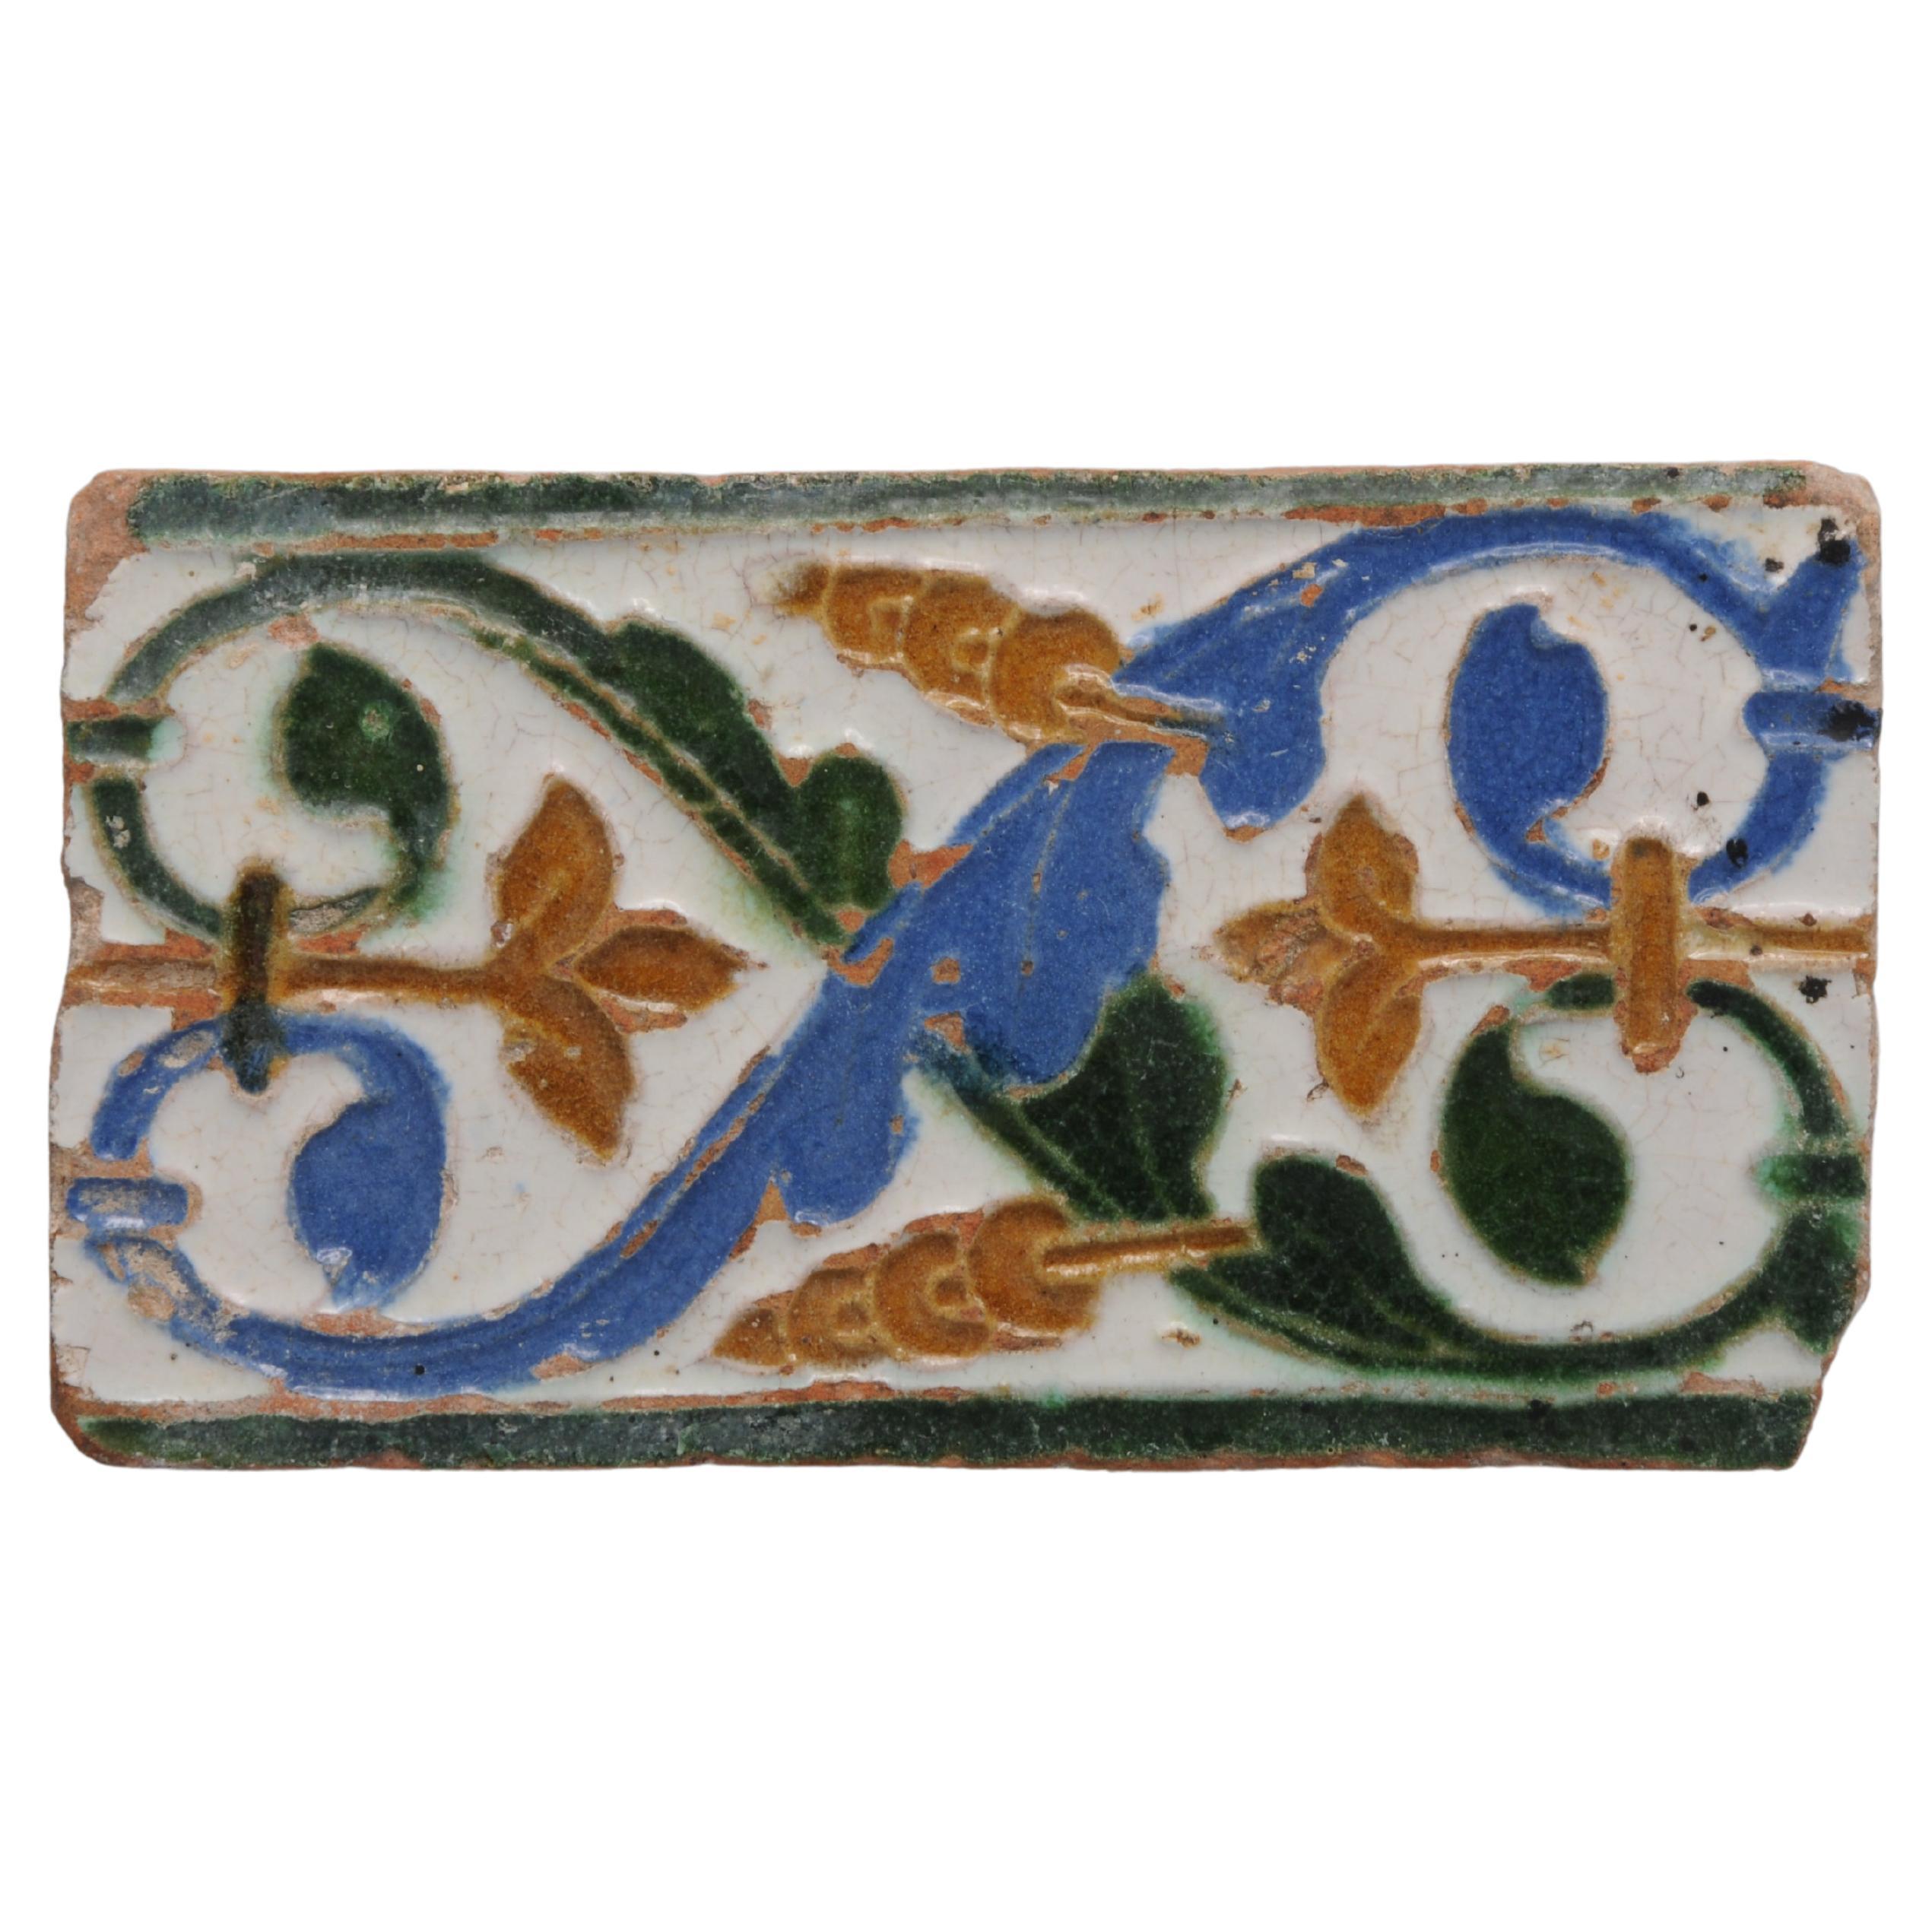 Spanish Azulejo Tile Arista y Cuenca - Toledo 16th century For Sale